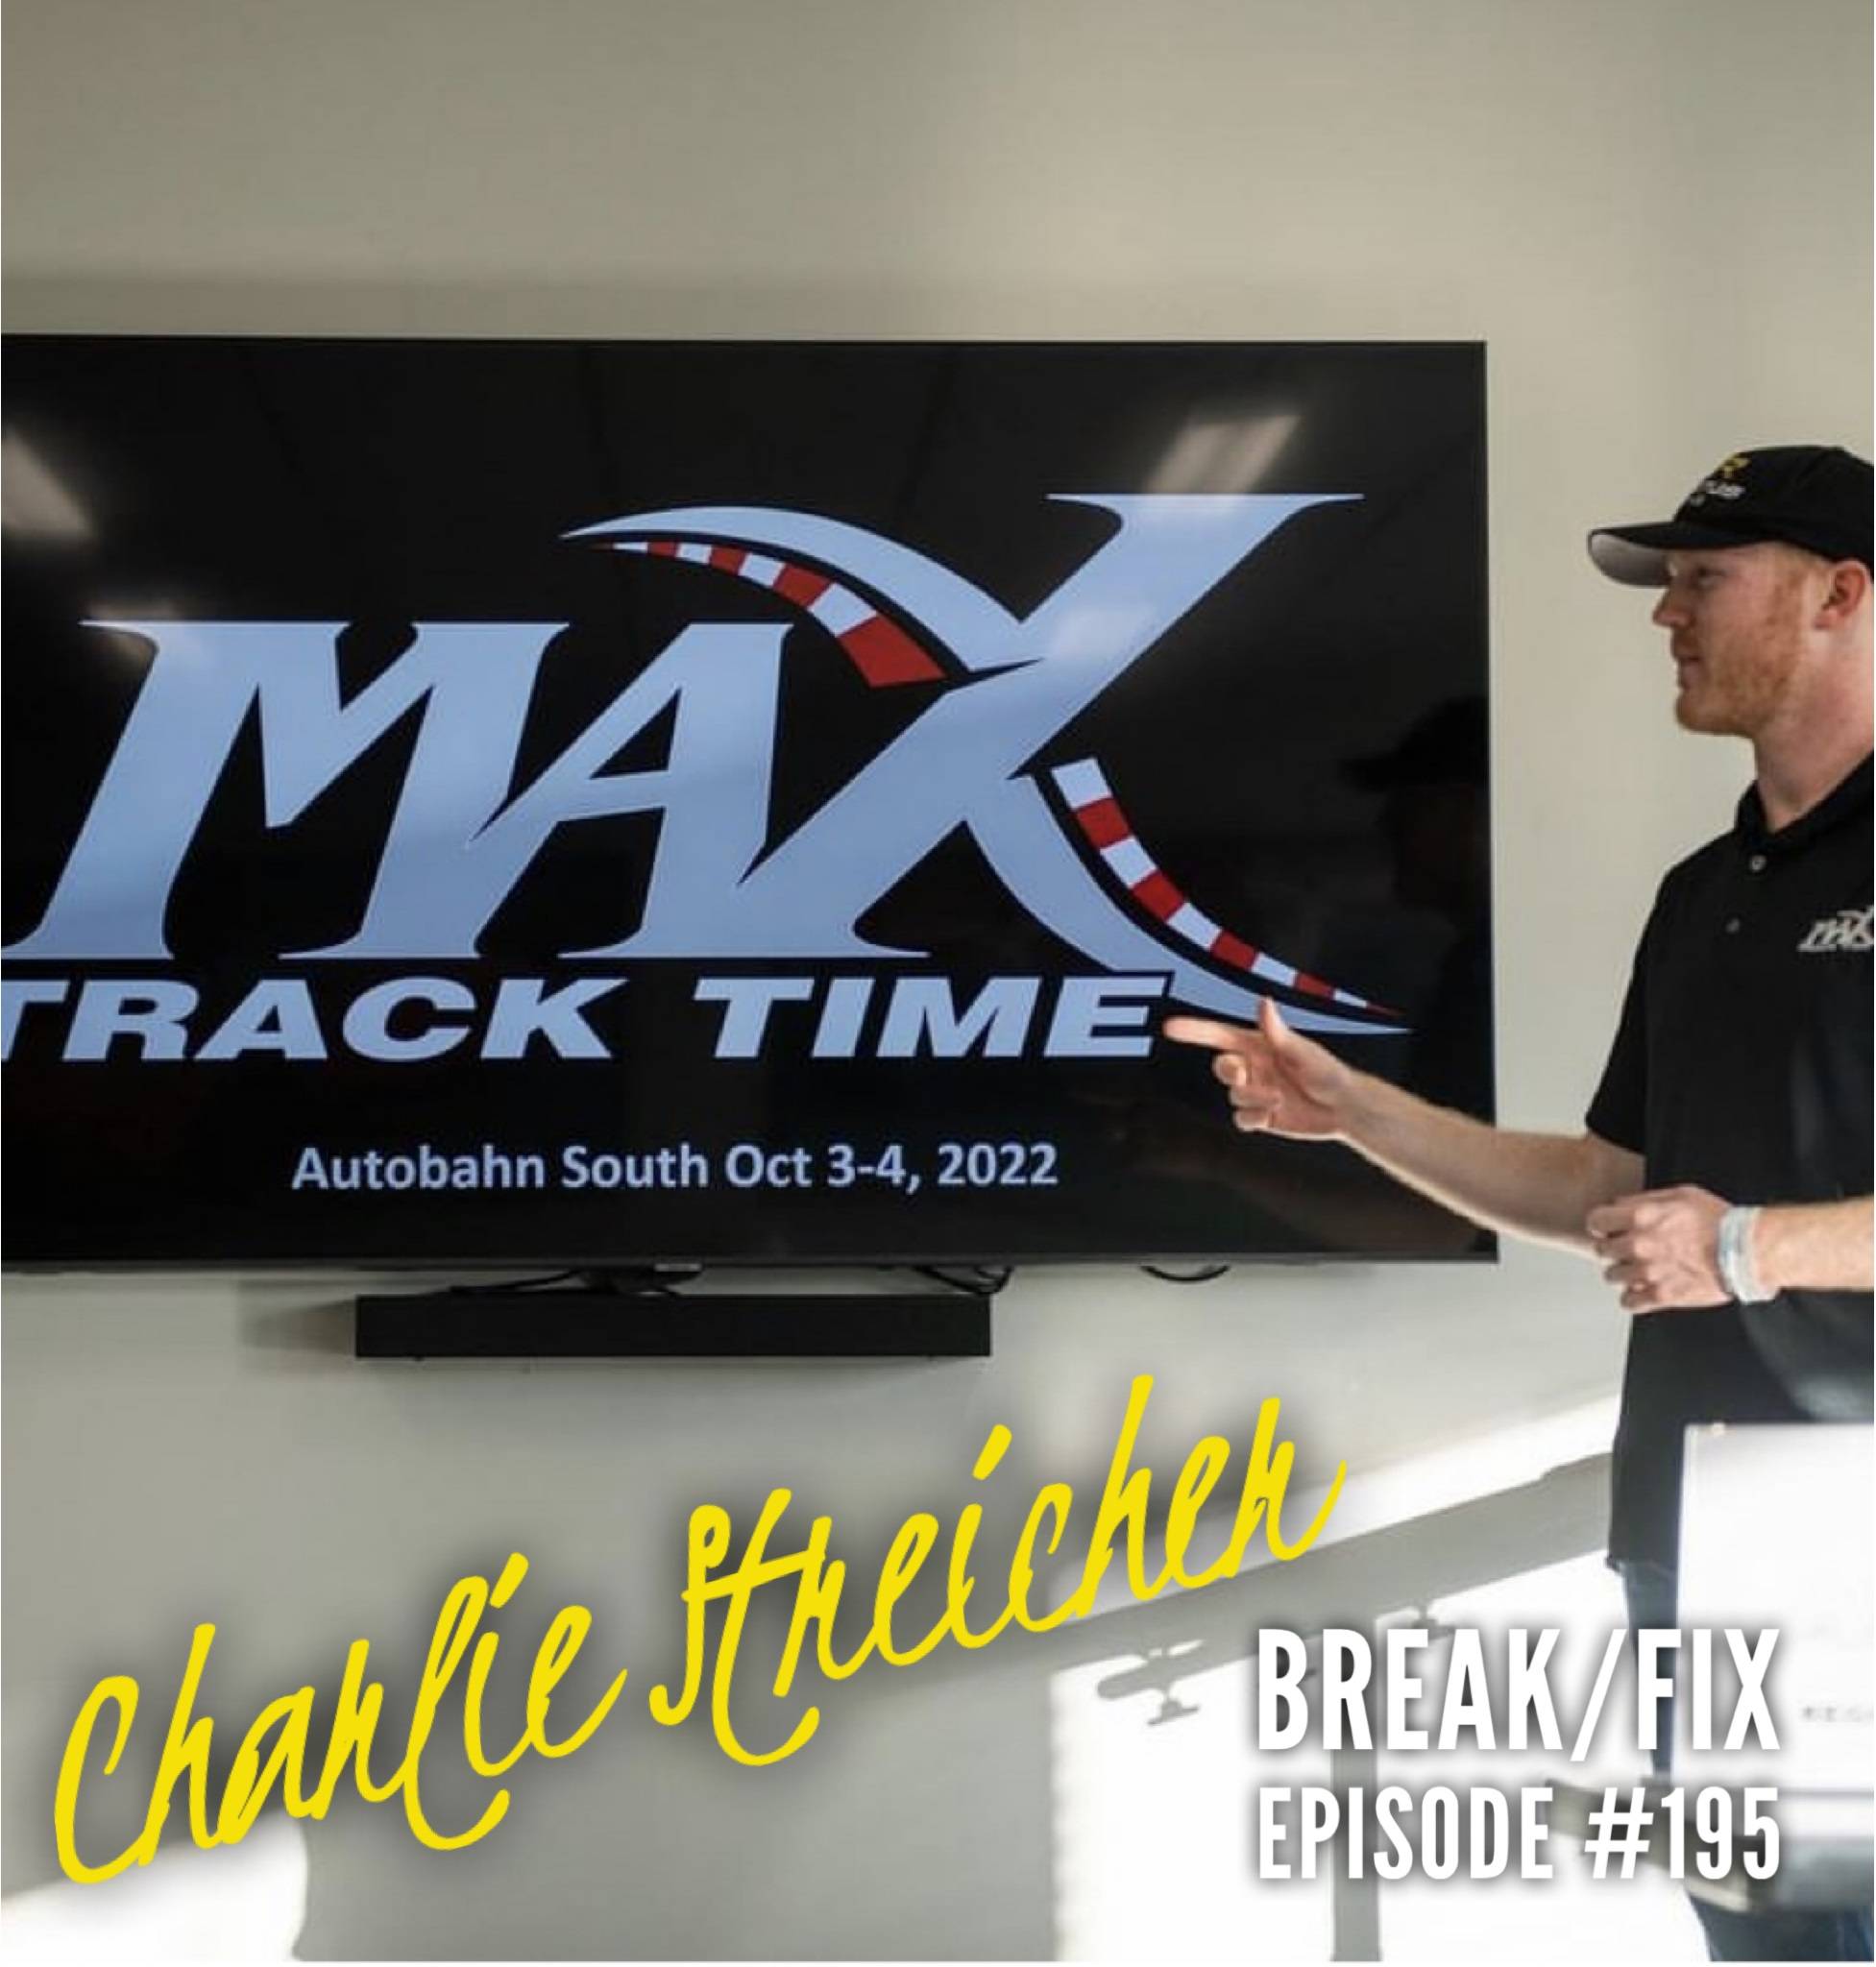 Charles Streicher Max Track Time on Break/Fix Podcast